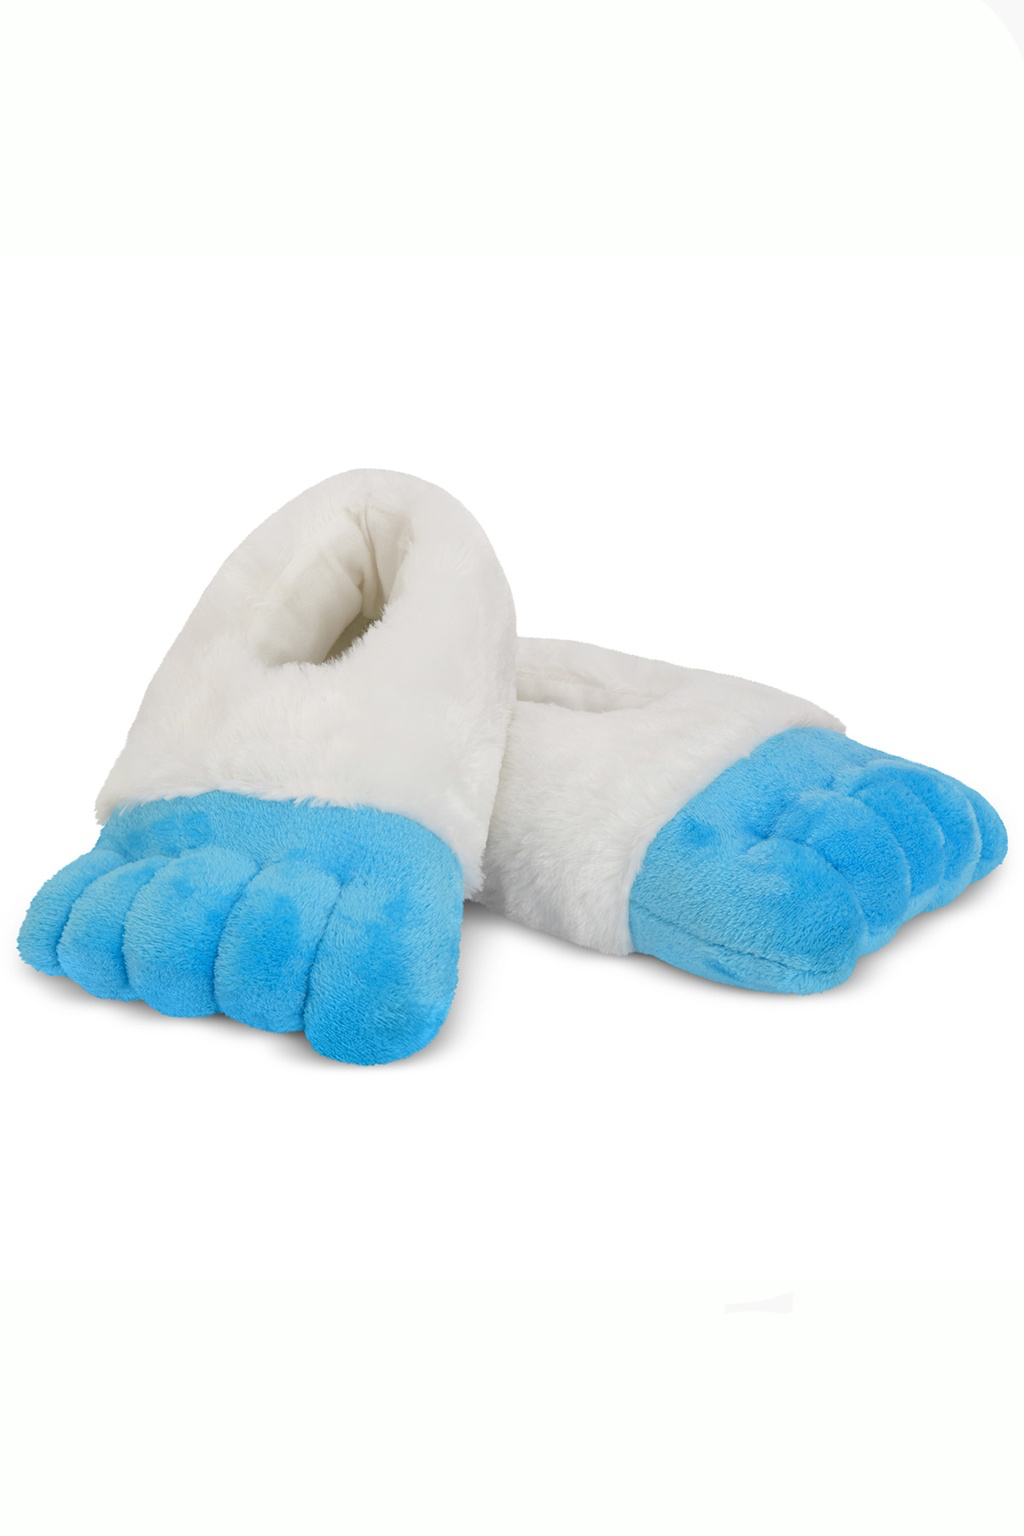 Kids Yeti Feet Slippers | Childrens Abominable Snowman Feet Slippers